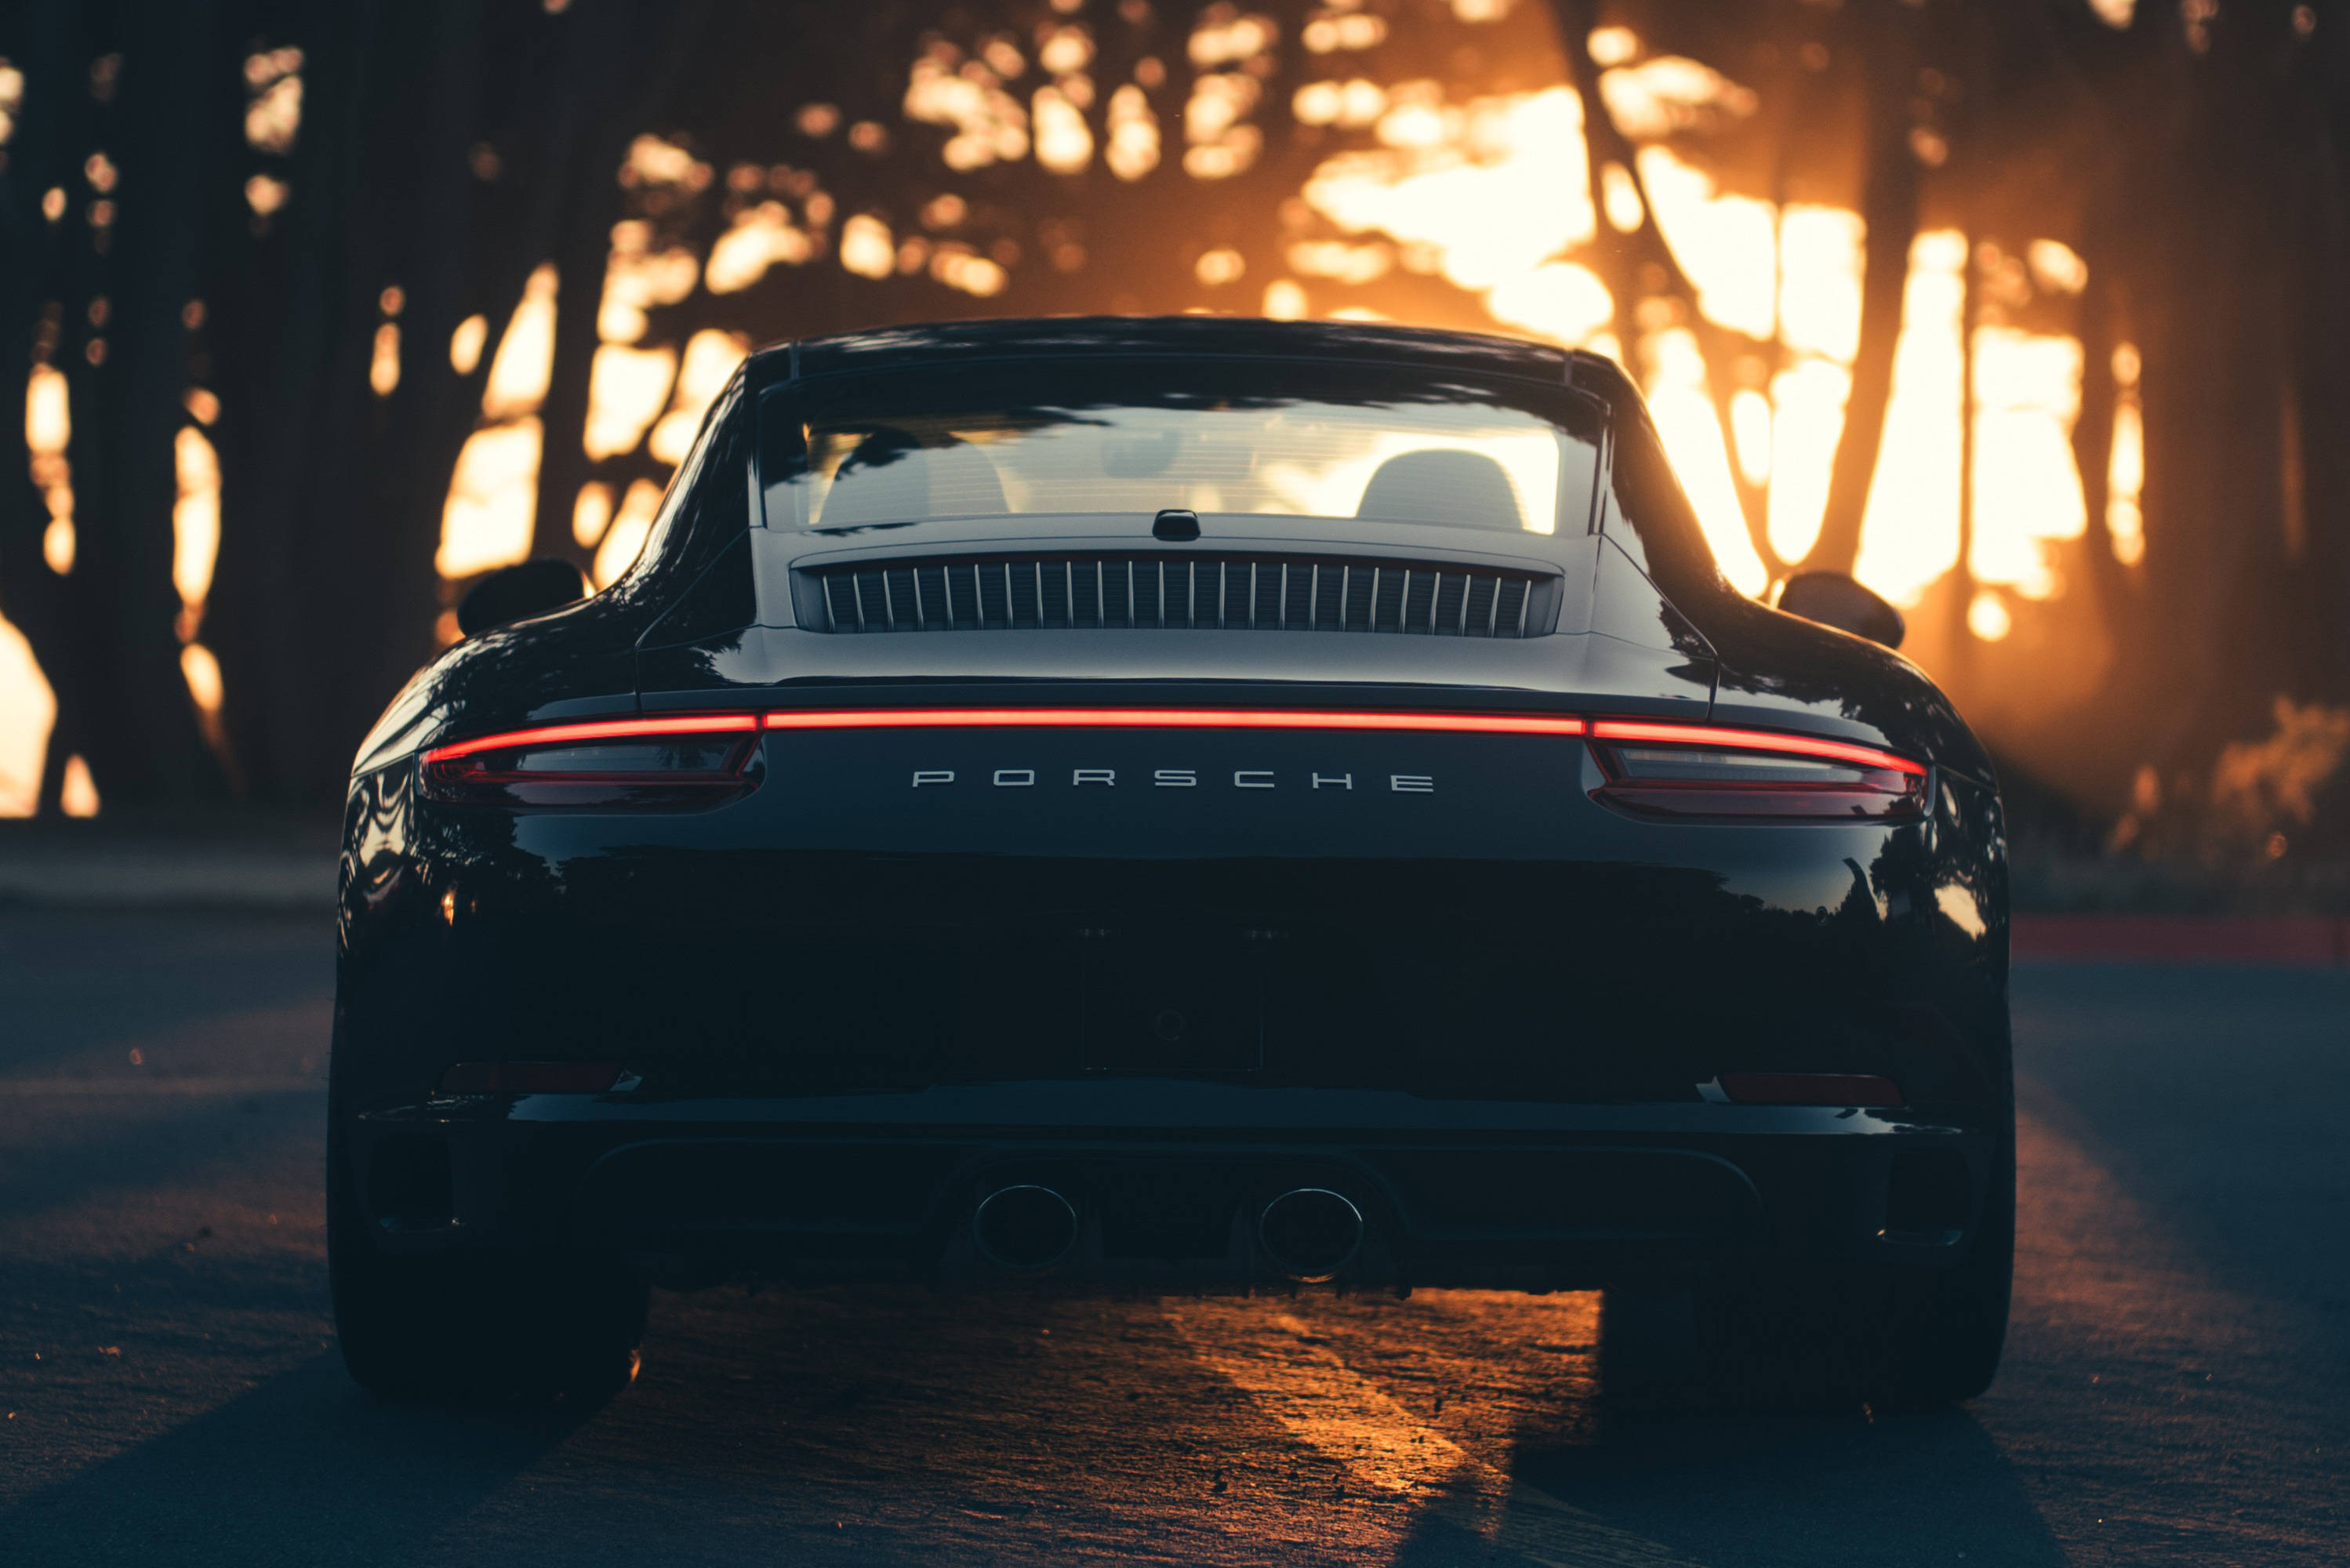 Sort Porsche 911 Se Solnedgangen Wallpaper